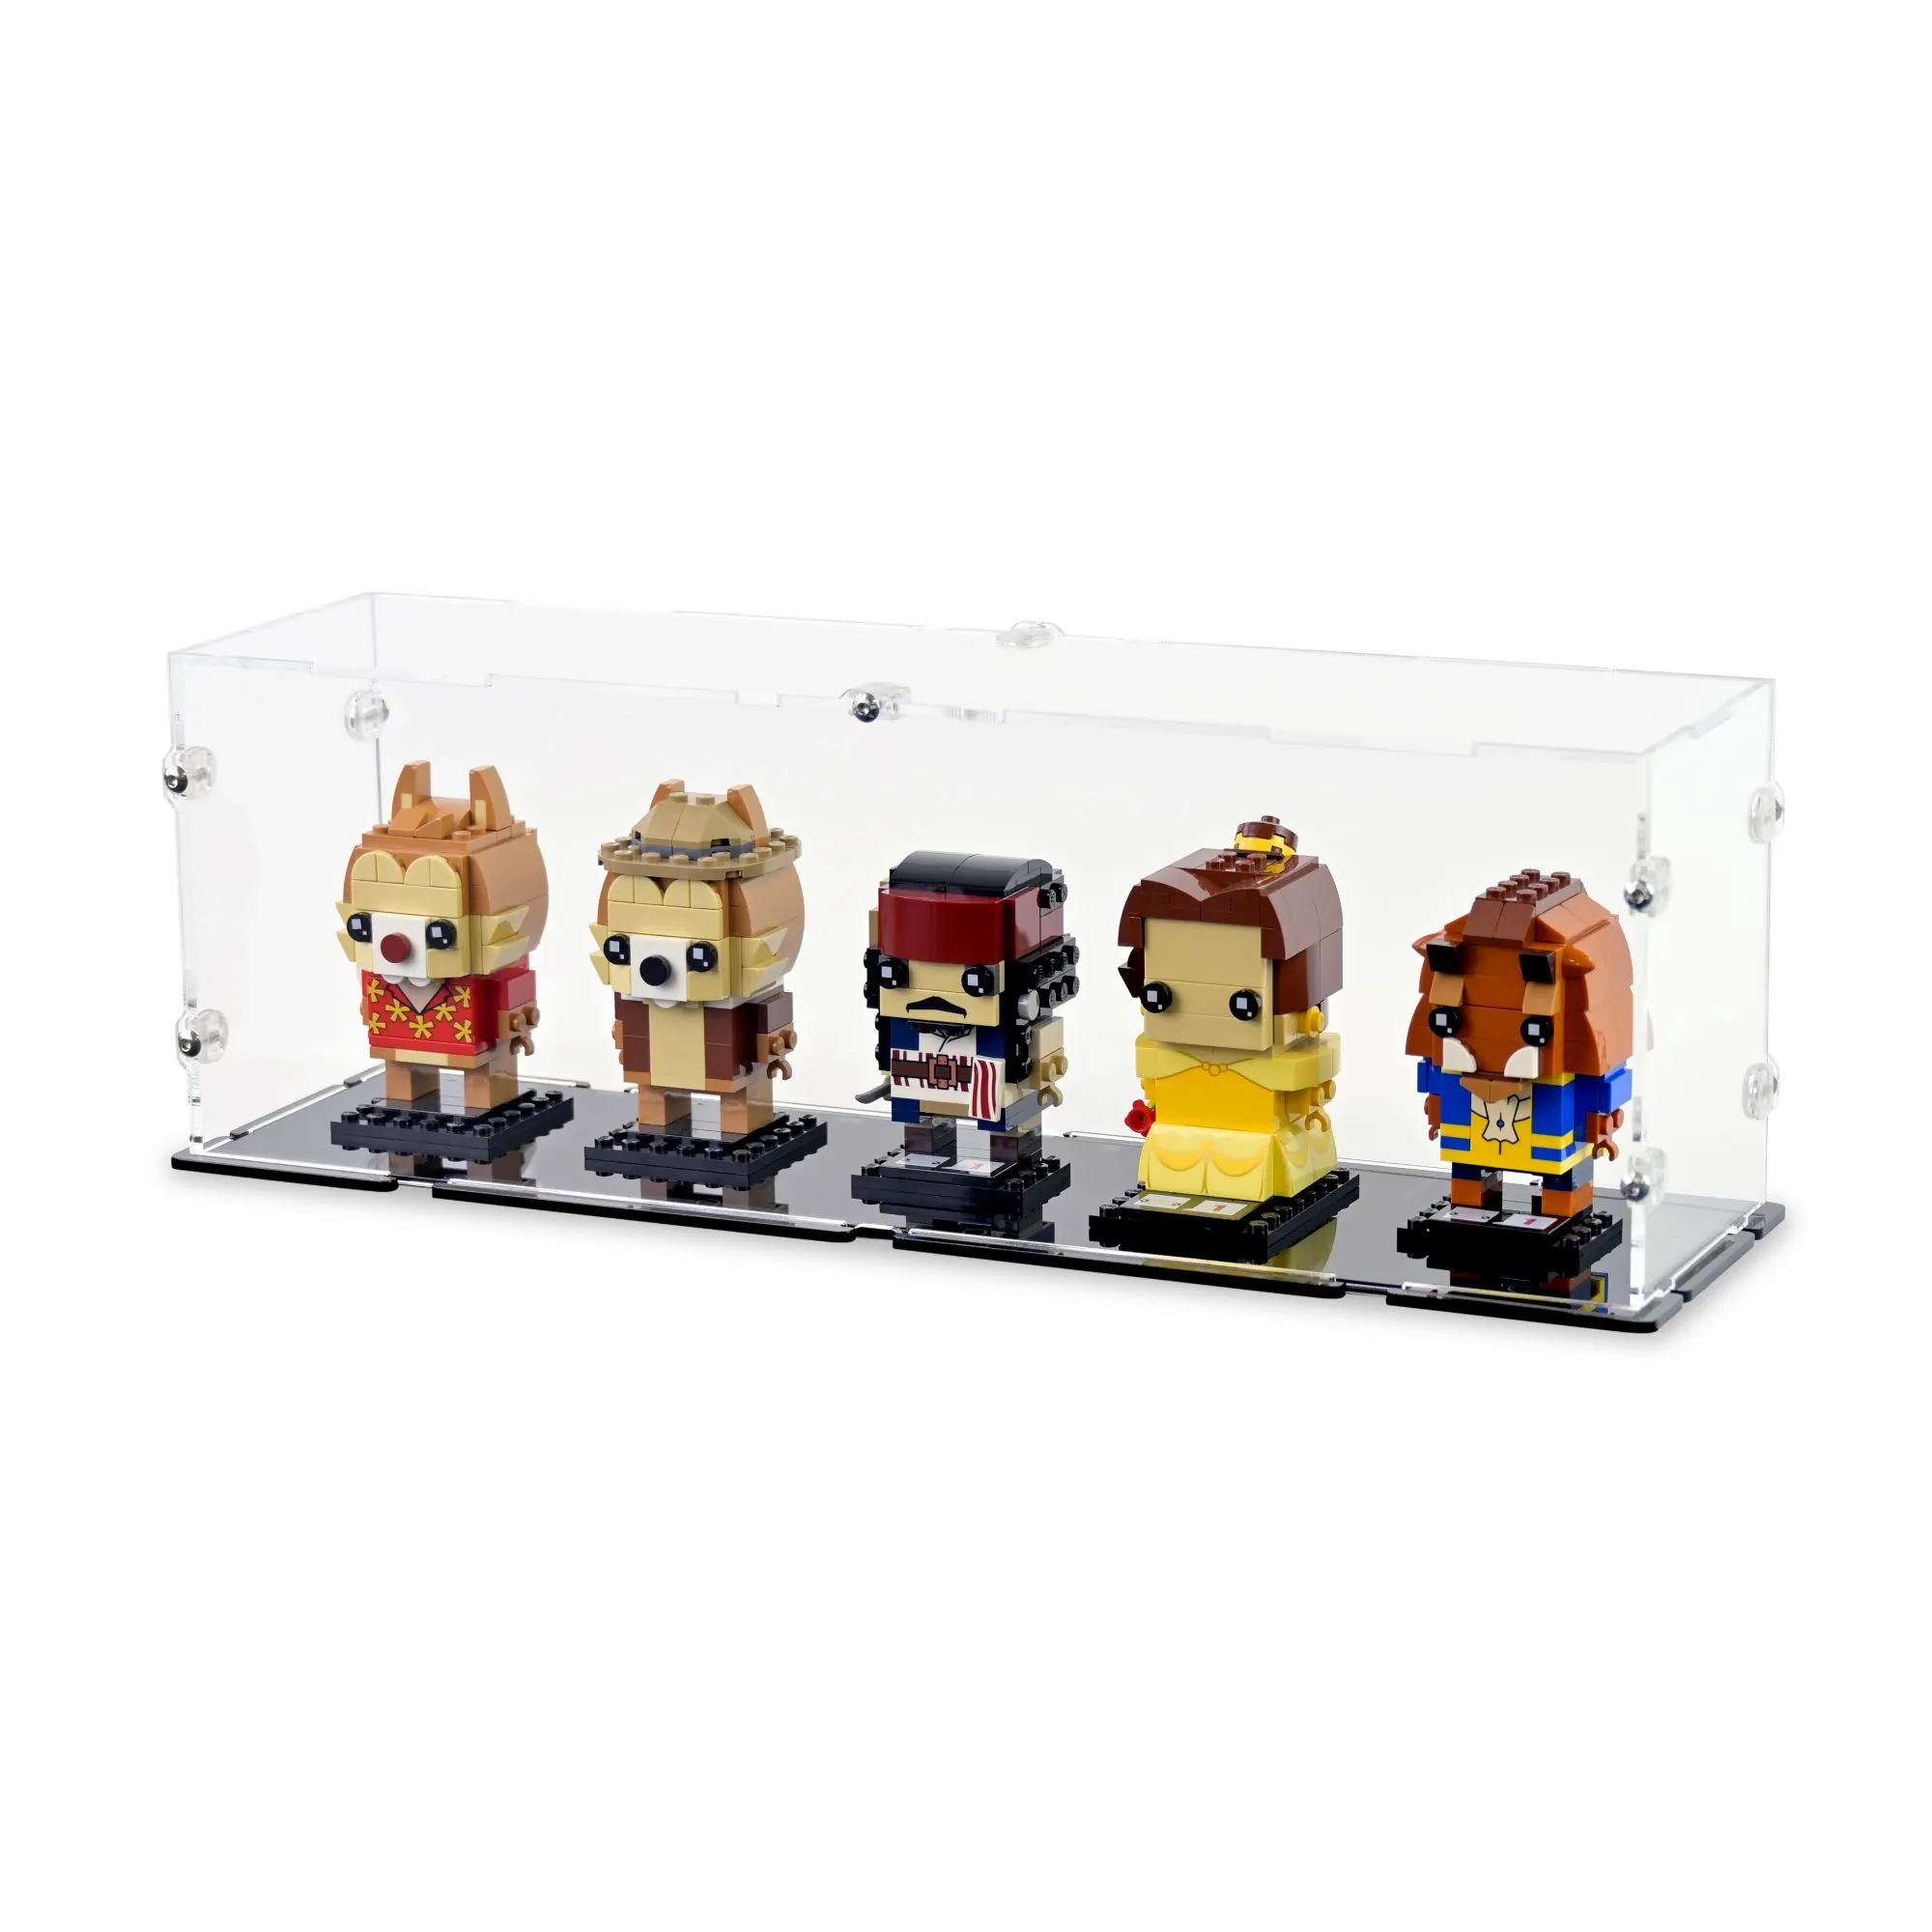 Acrylic Display Case for 5x LEGO | iDisplayit